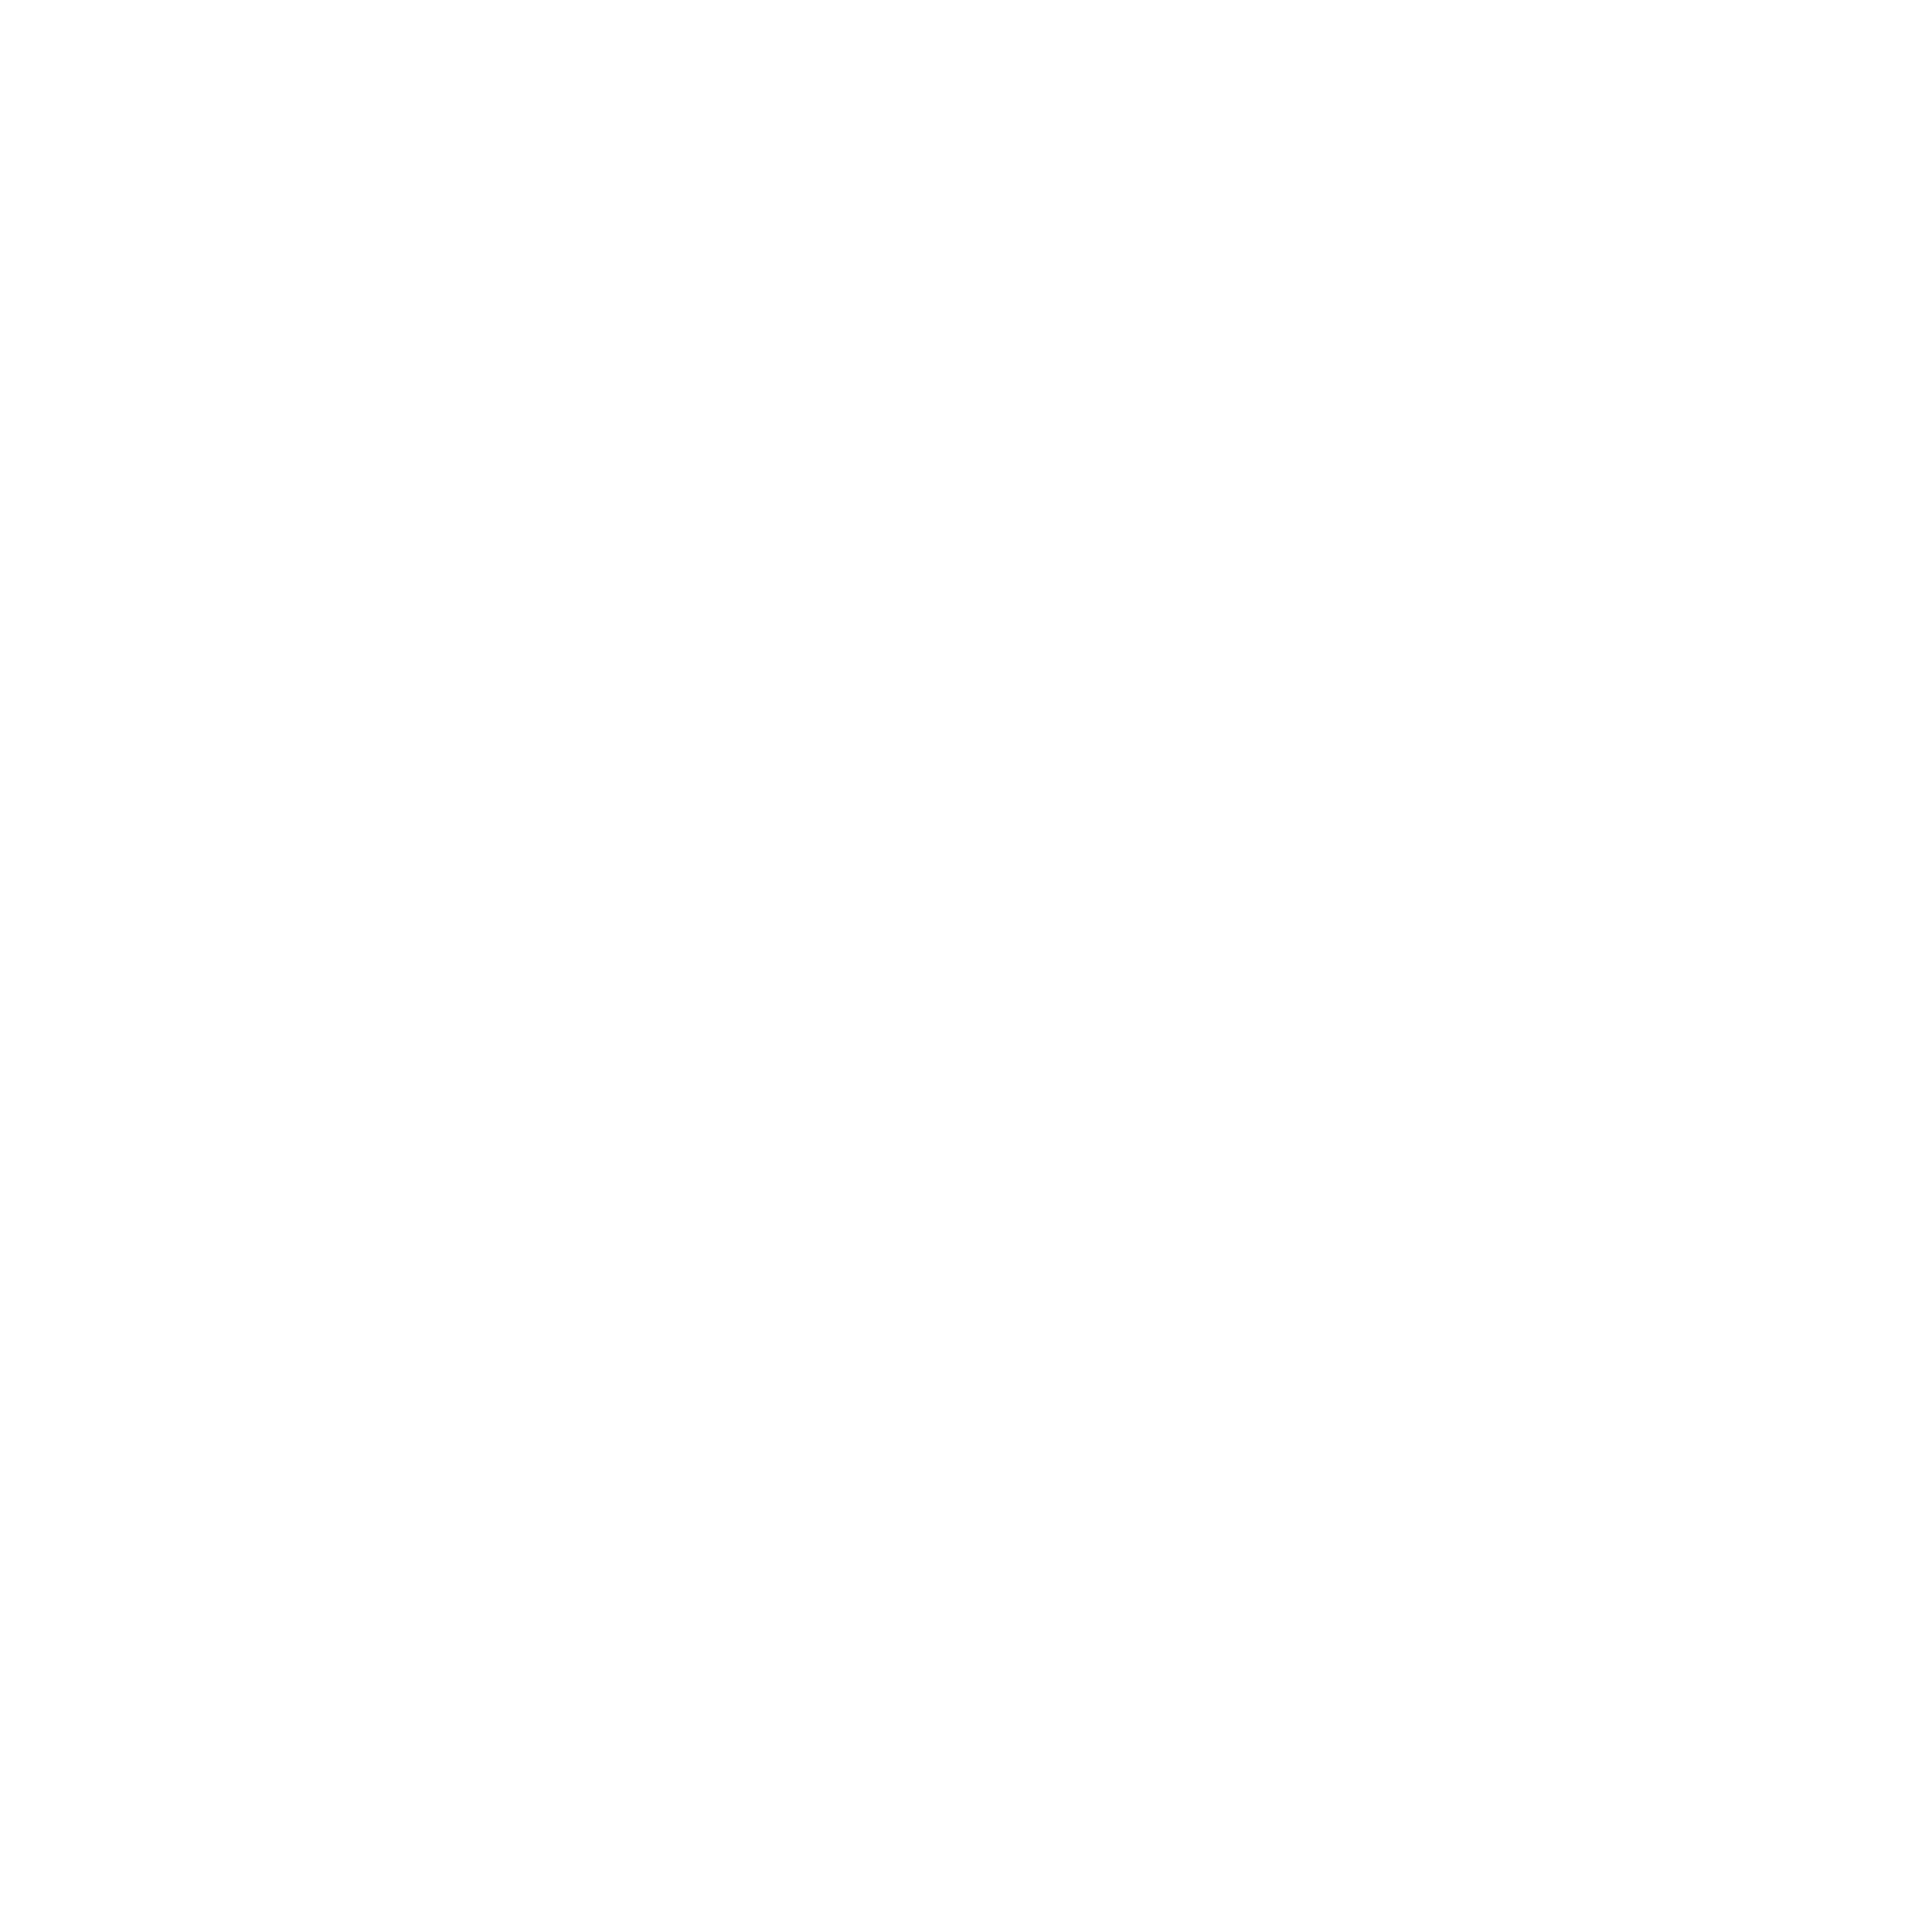 City of Los Angeles seal